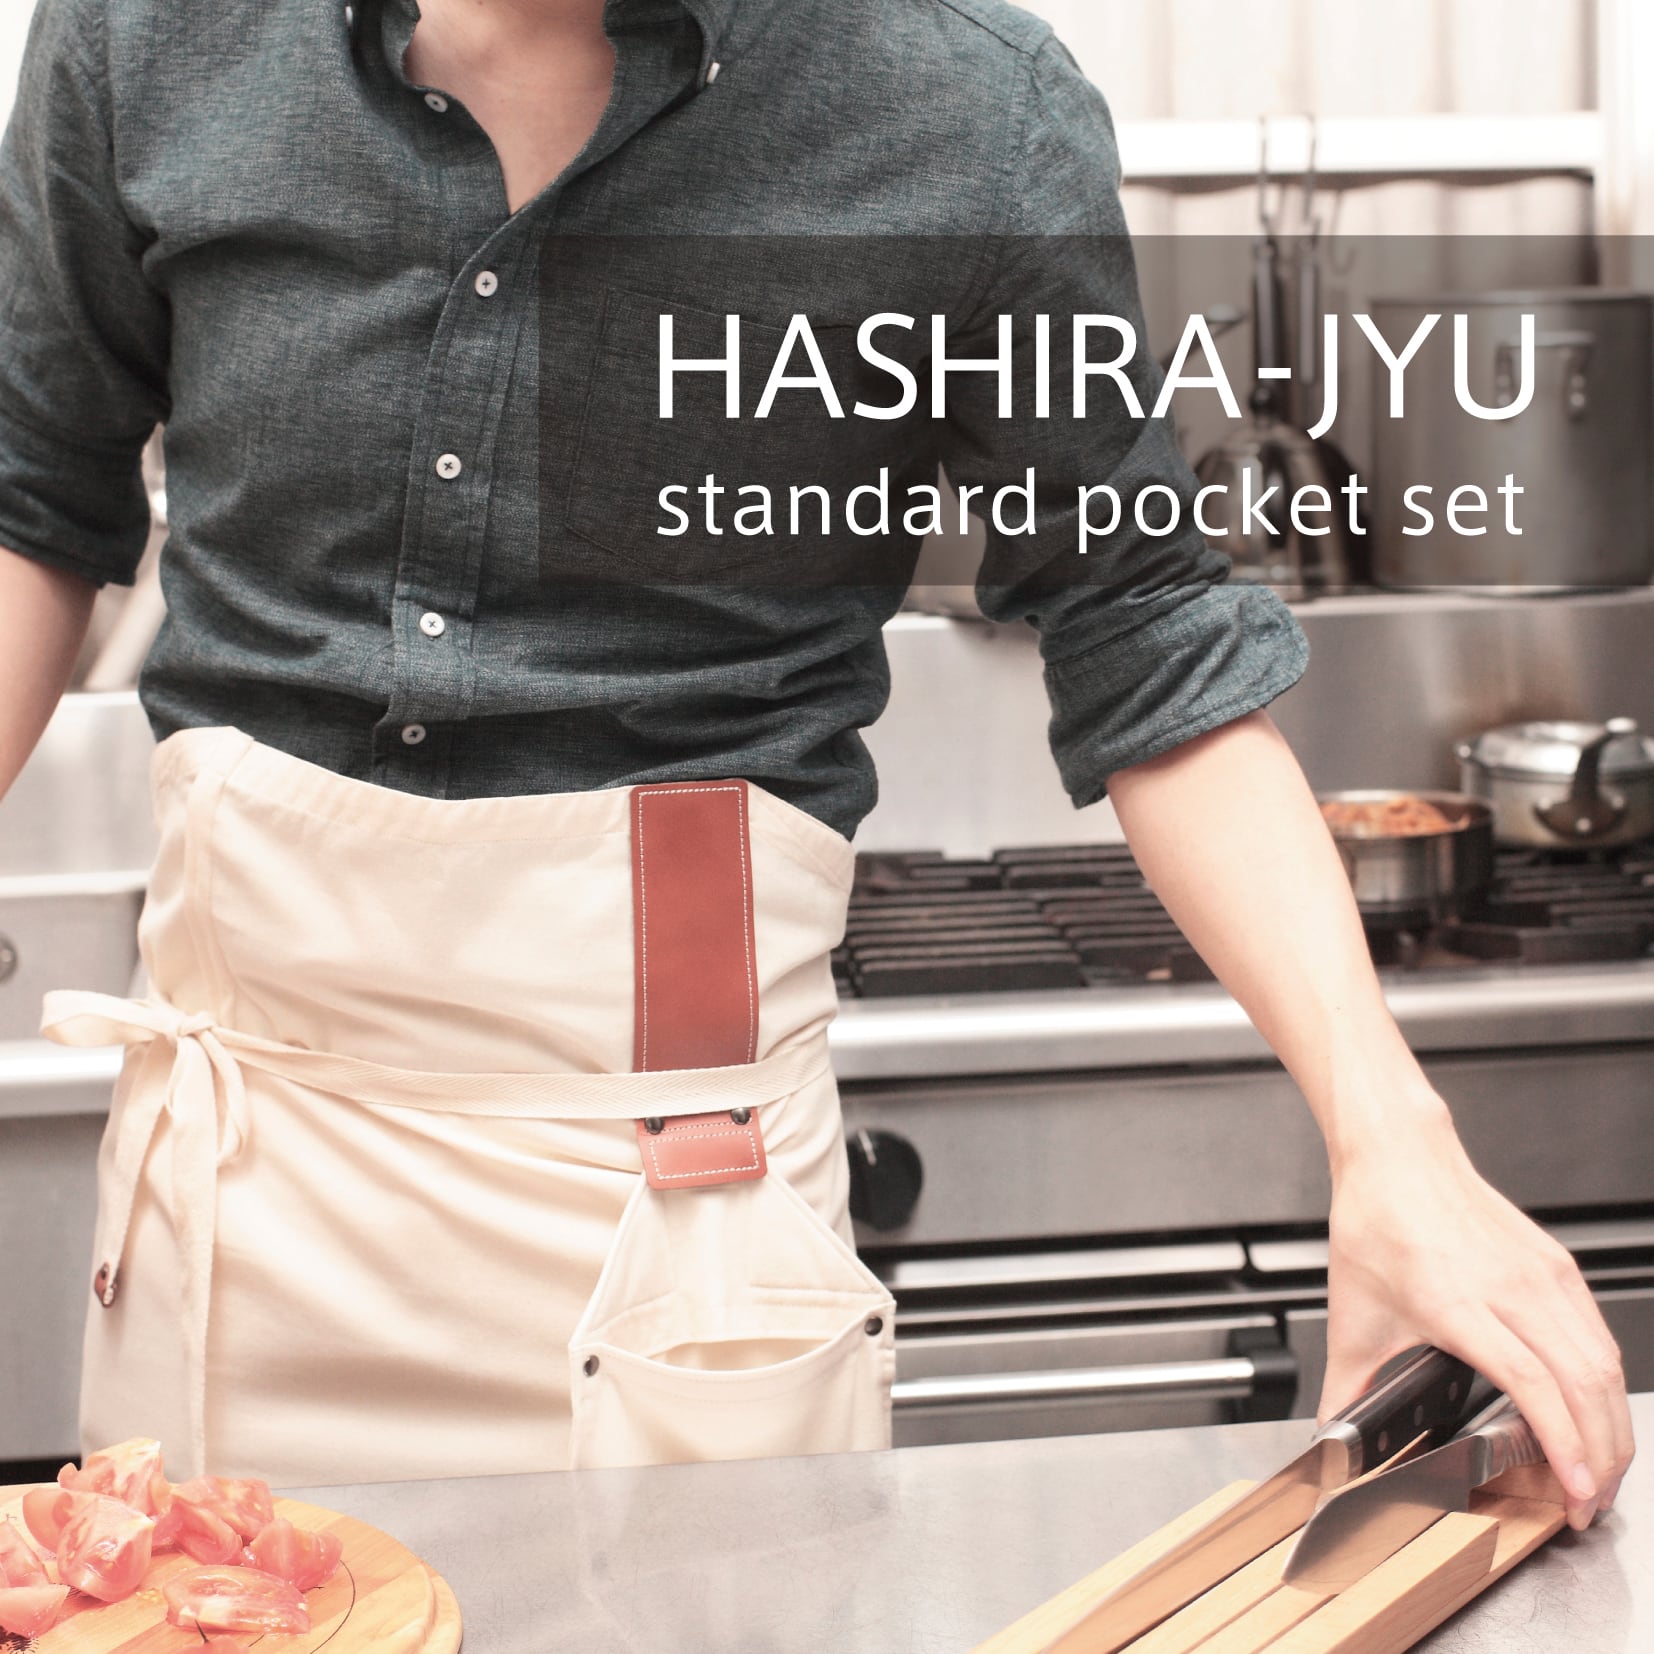 HASHIRA-JYU standard pocket set